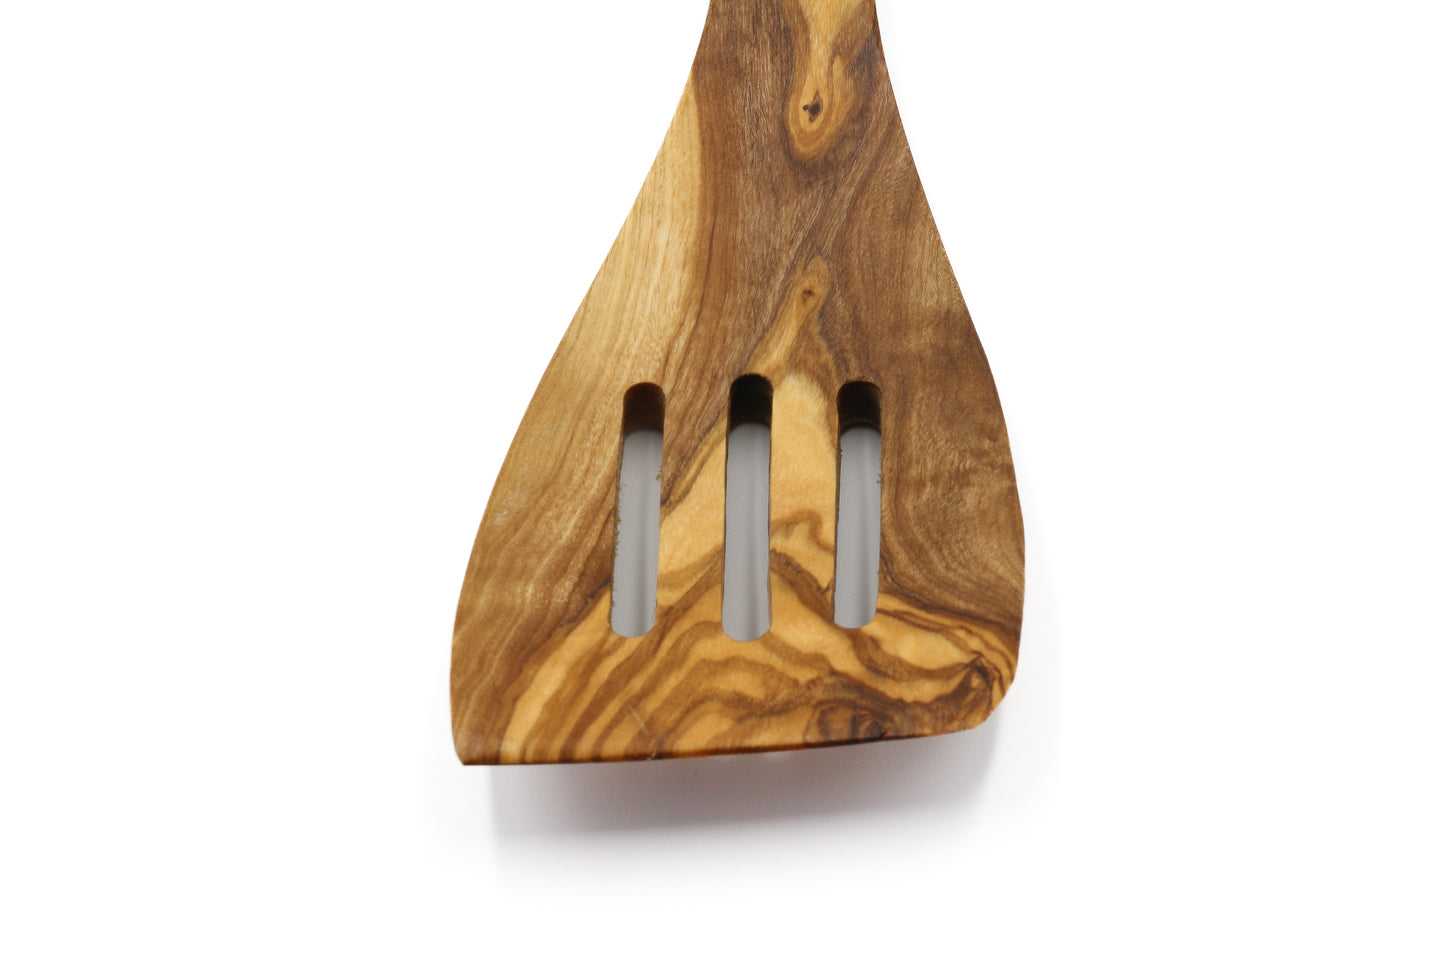 Artisan-made perforated olive wood spatula